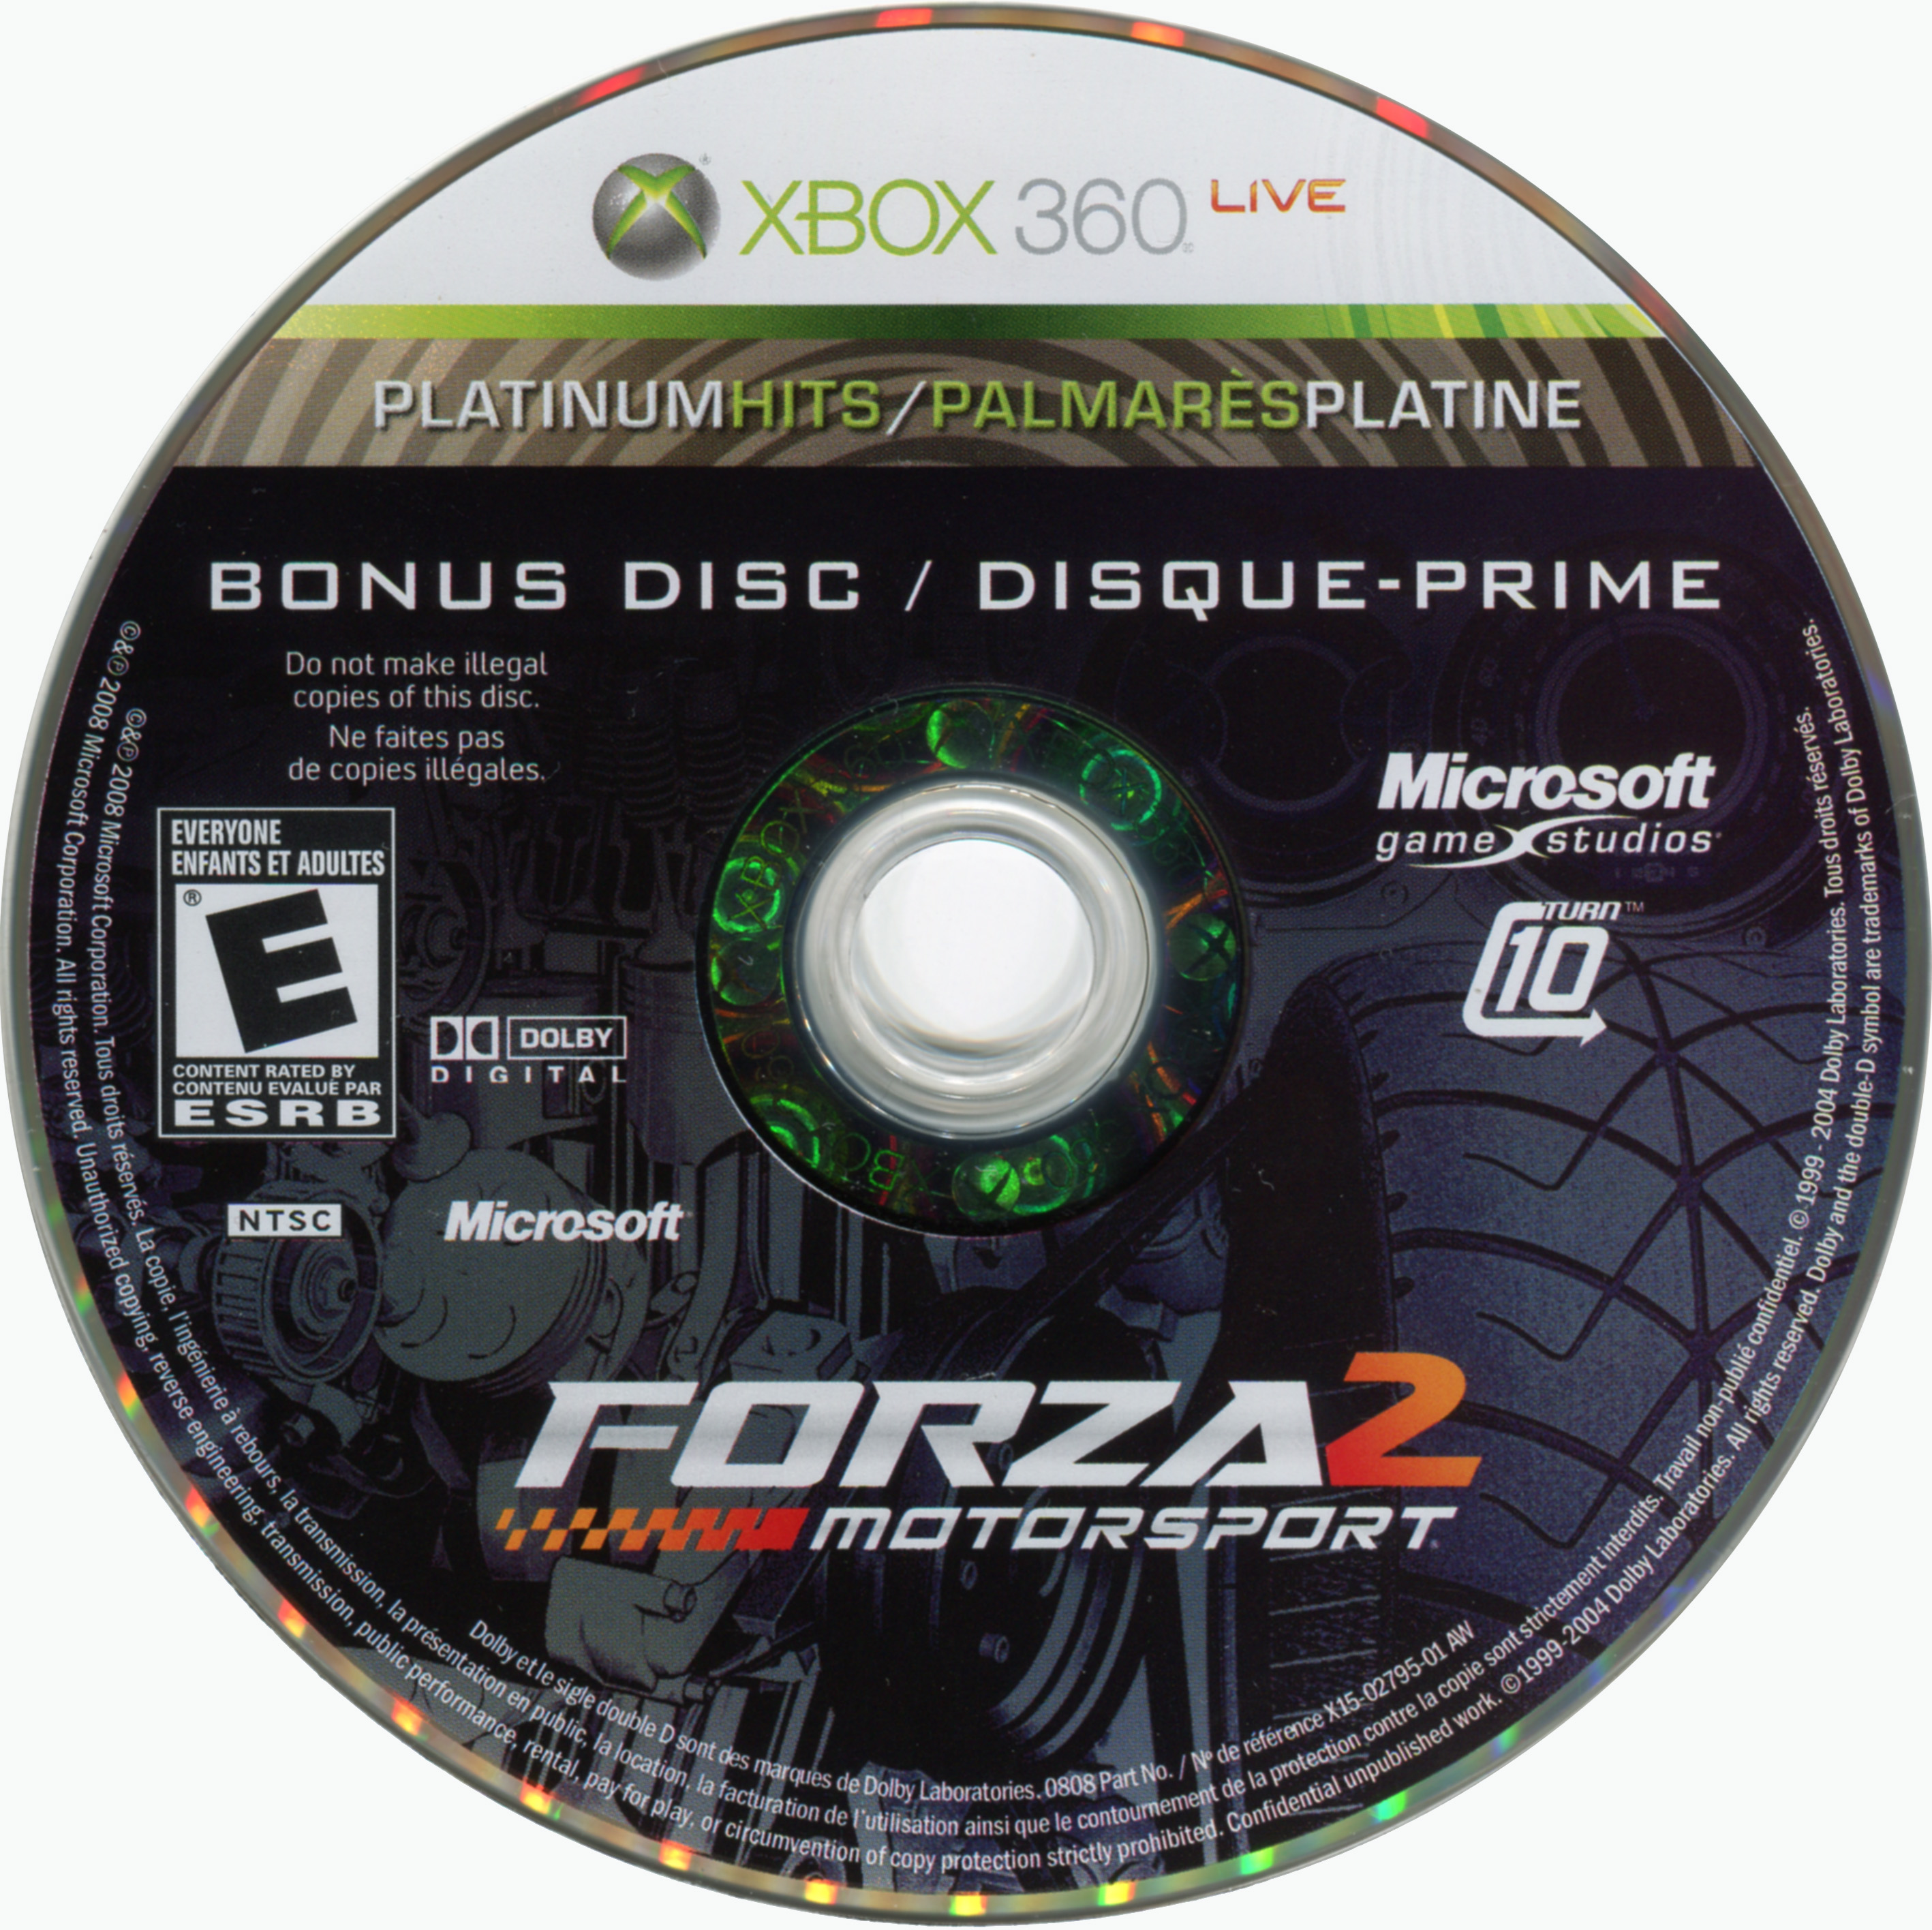 Forza Horizon 3 shows that Microsoft hates PC gaming